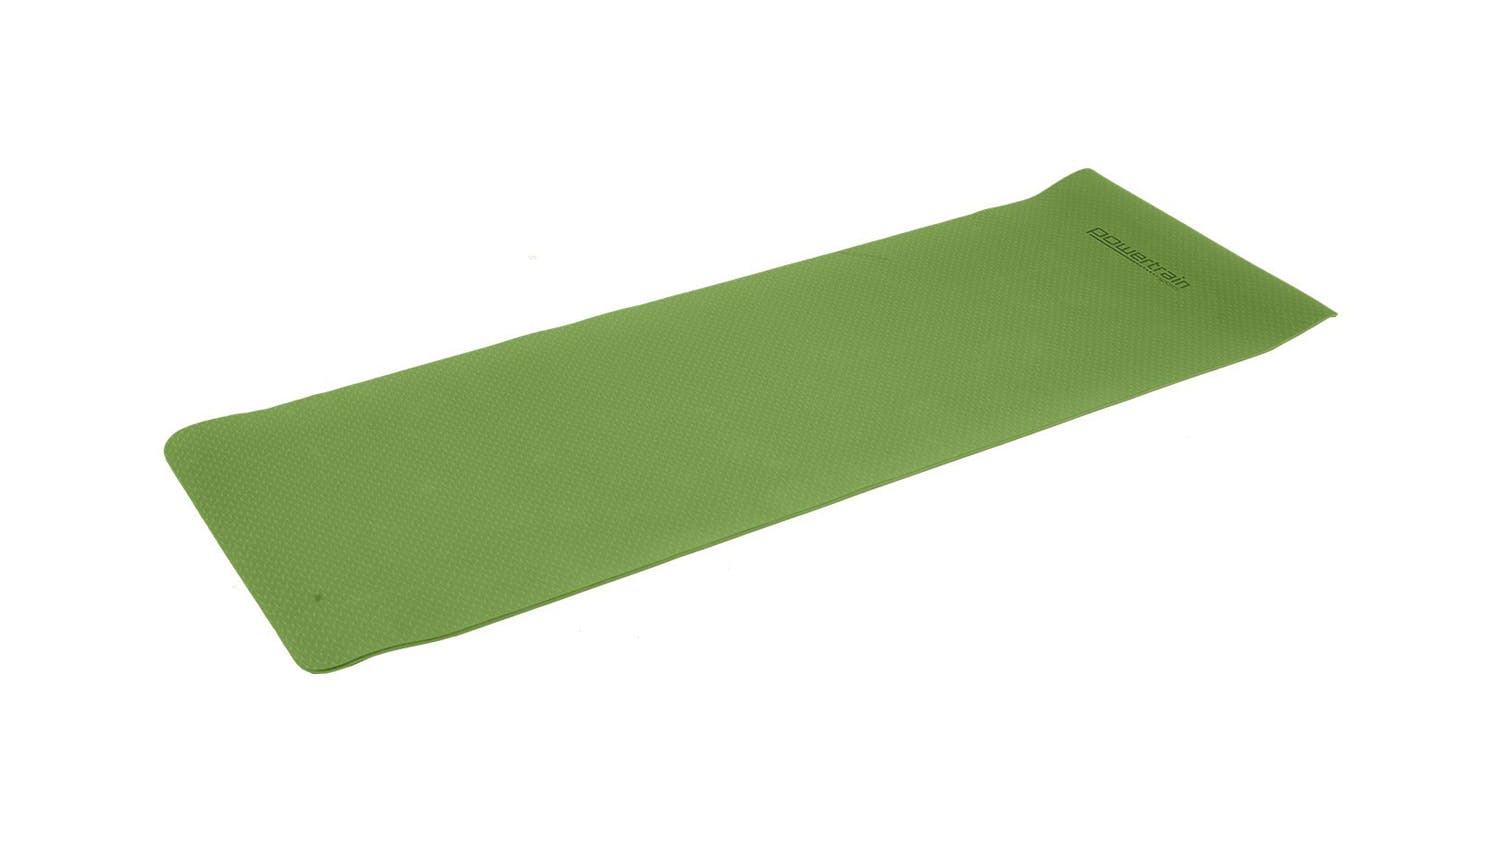 Powertrain 6mm Eco-Friendly TPE Yoga Exercise Mat - Green